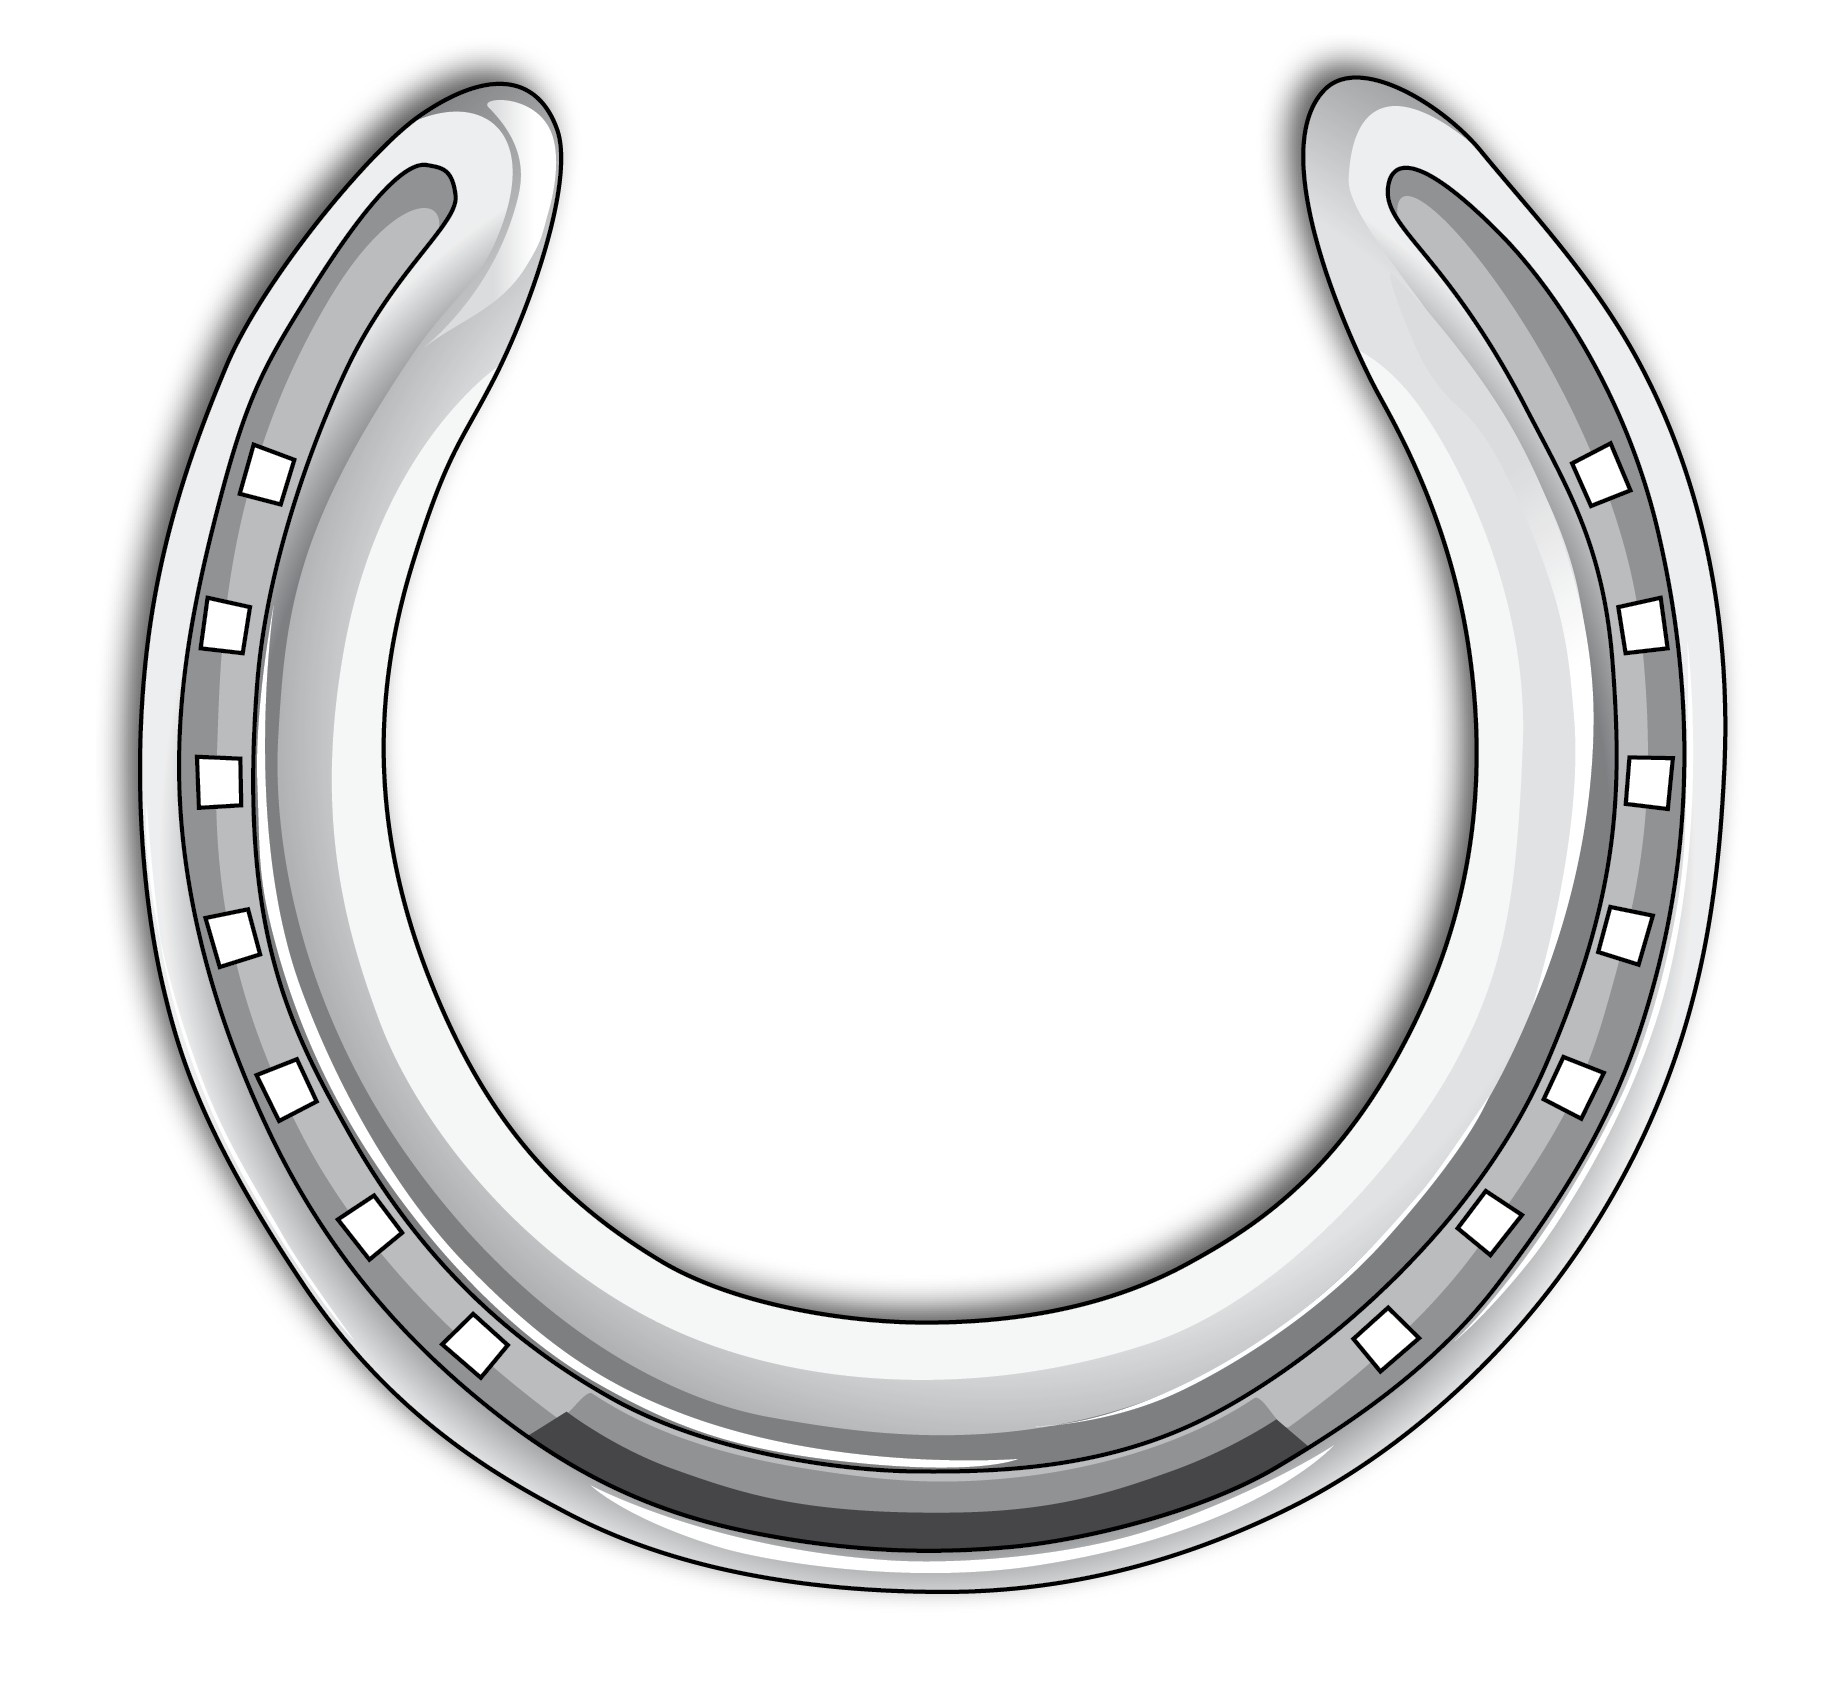 Horse shoe free horseshoe clipart the cliparts